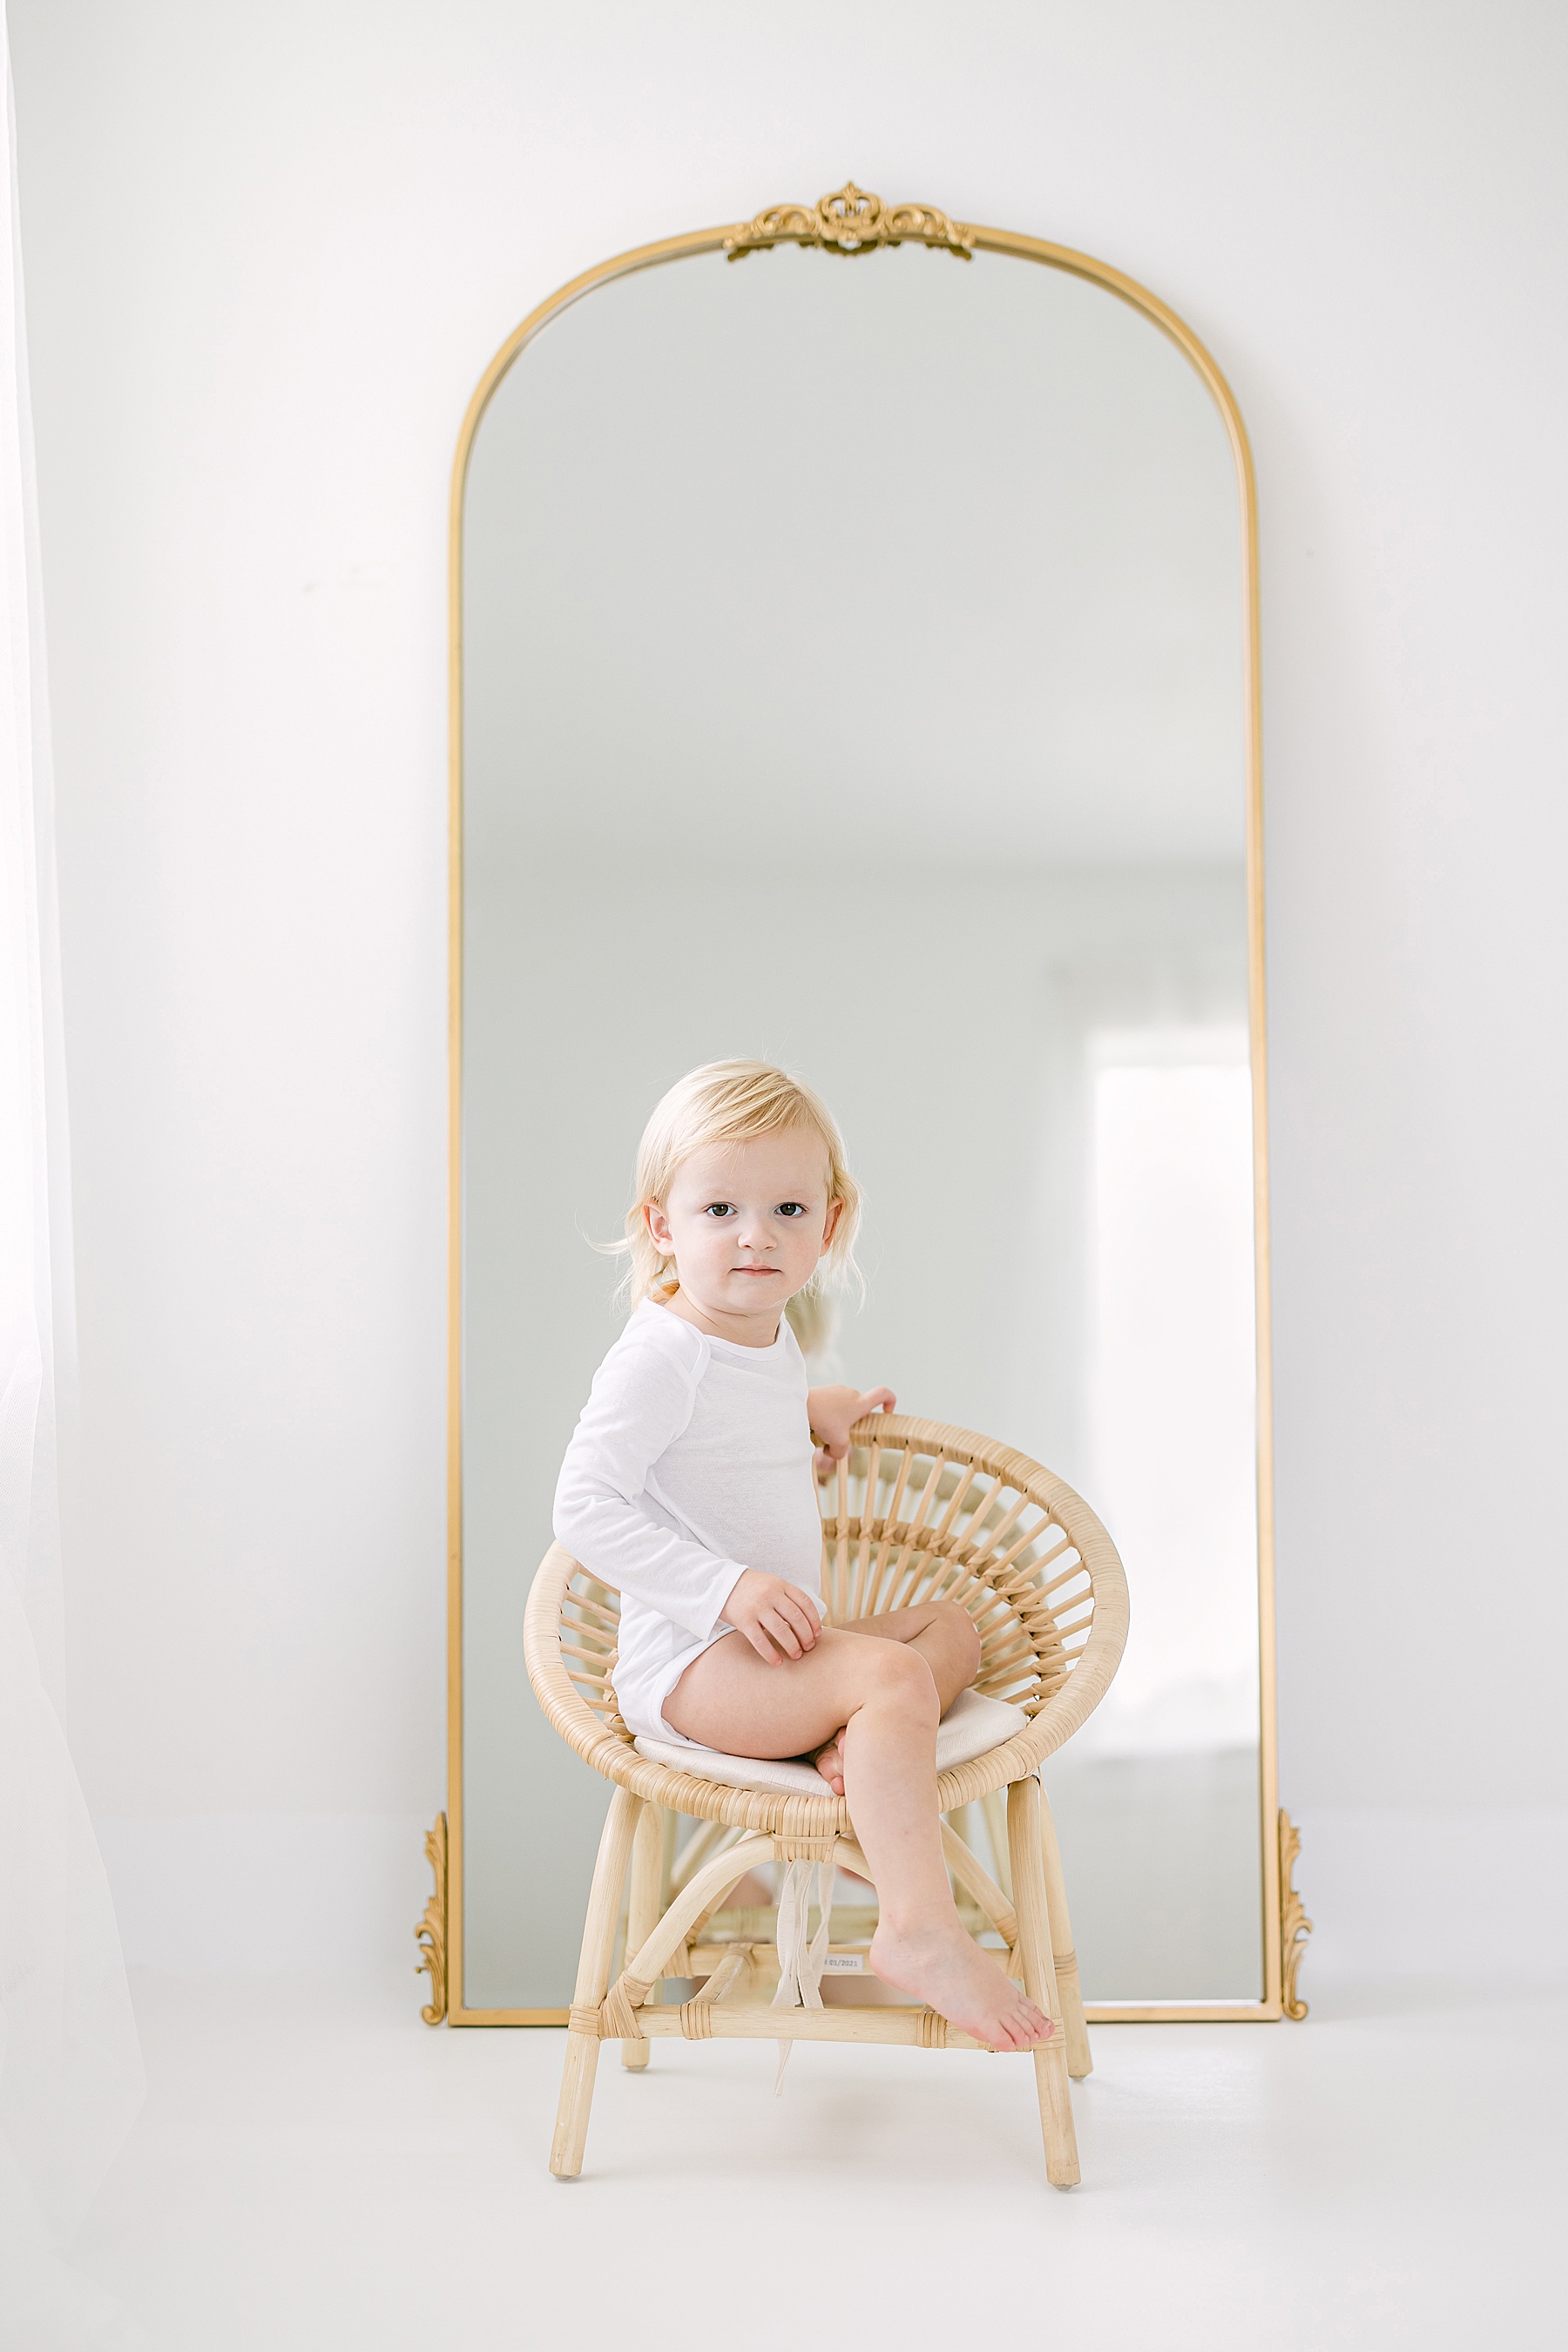 baby boy in white onesie sitting in rattan chair in front of gold floor mirror